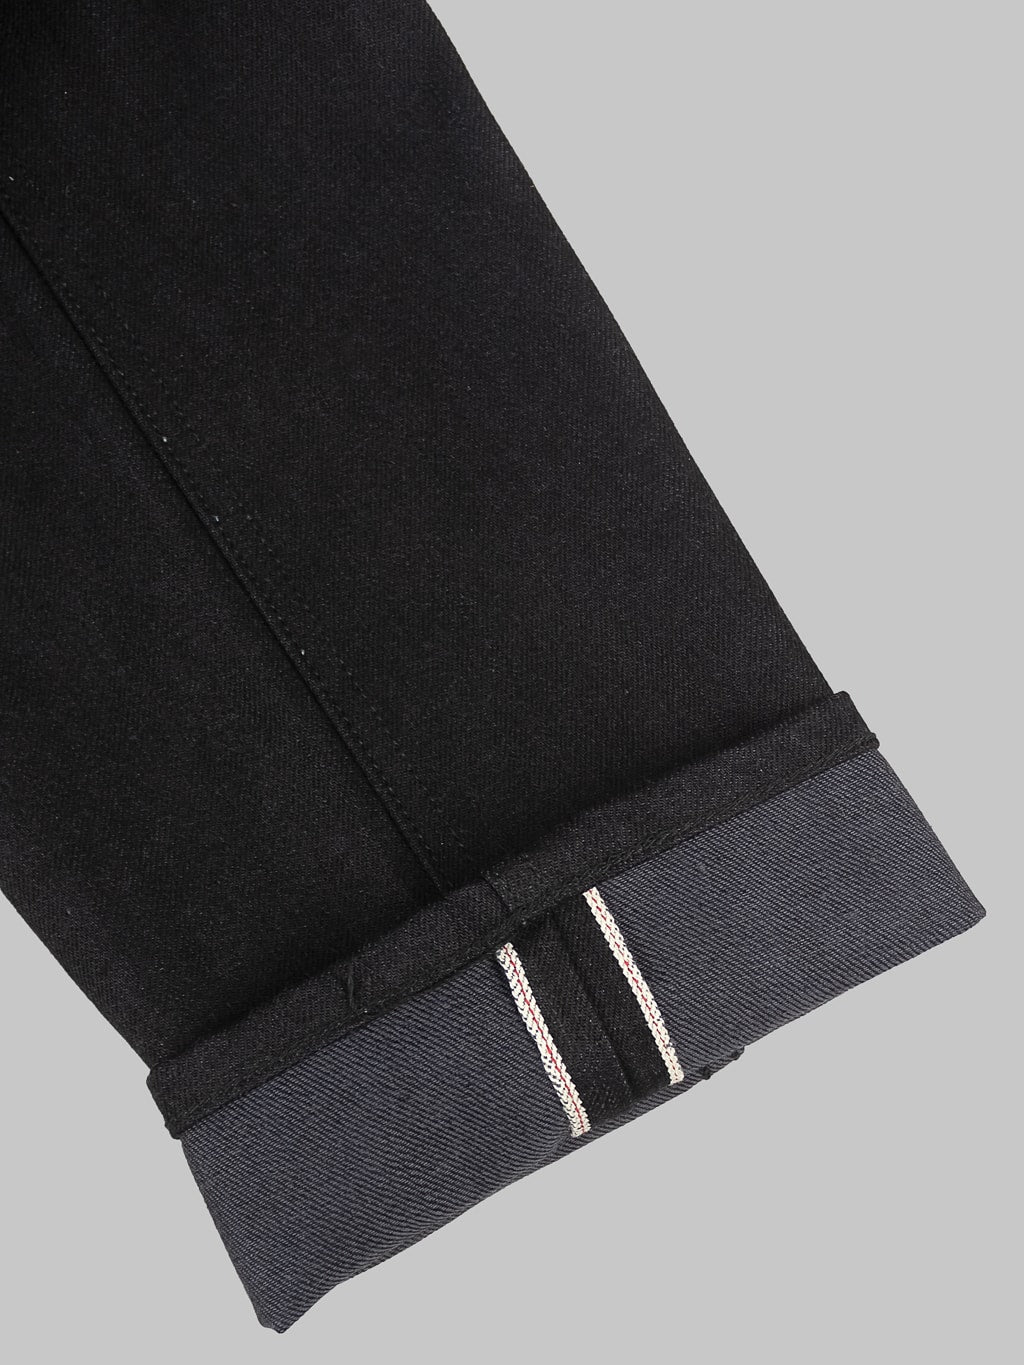 Freenote Cloth Rios Black Grey Japanese Denim Slim Straight Jeans selvedge